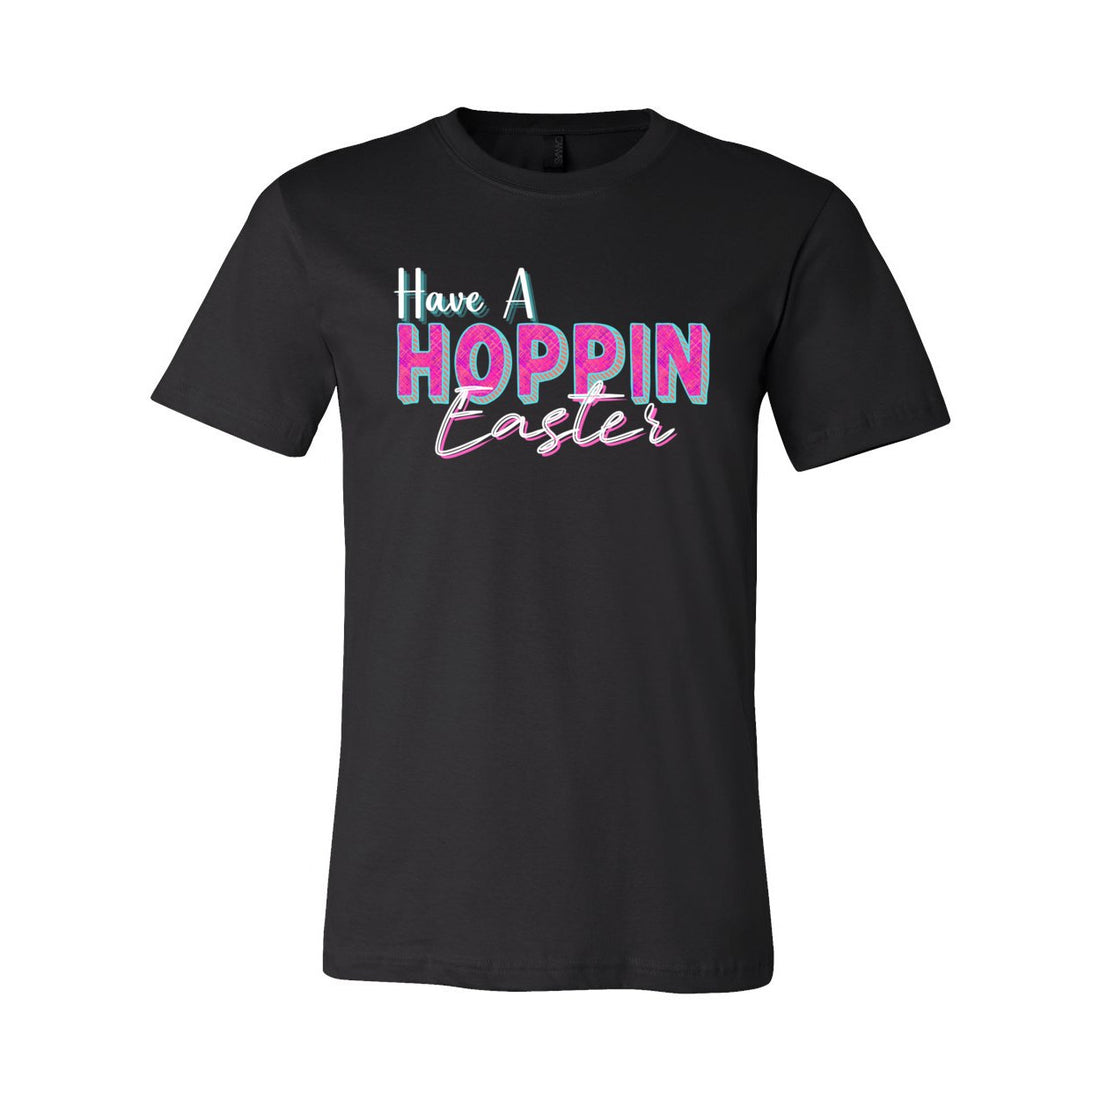 Hoppin' Easter Tee - T-Shirts - Positively Sassy - Hoppin' Easter Tee